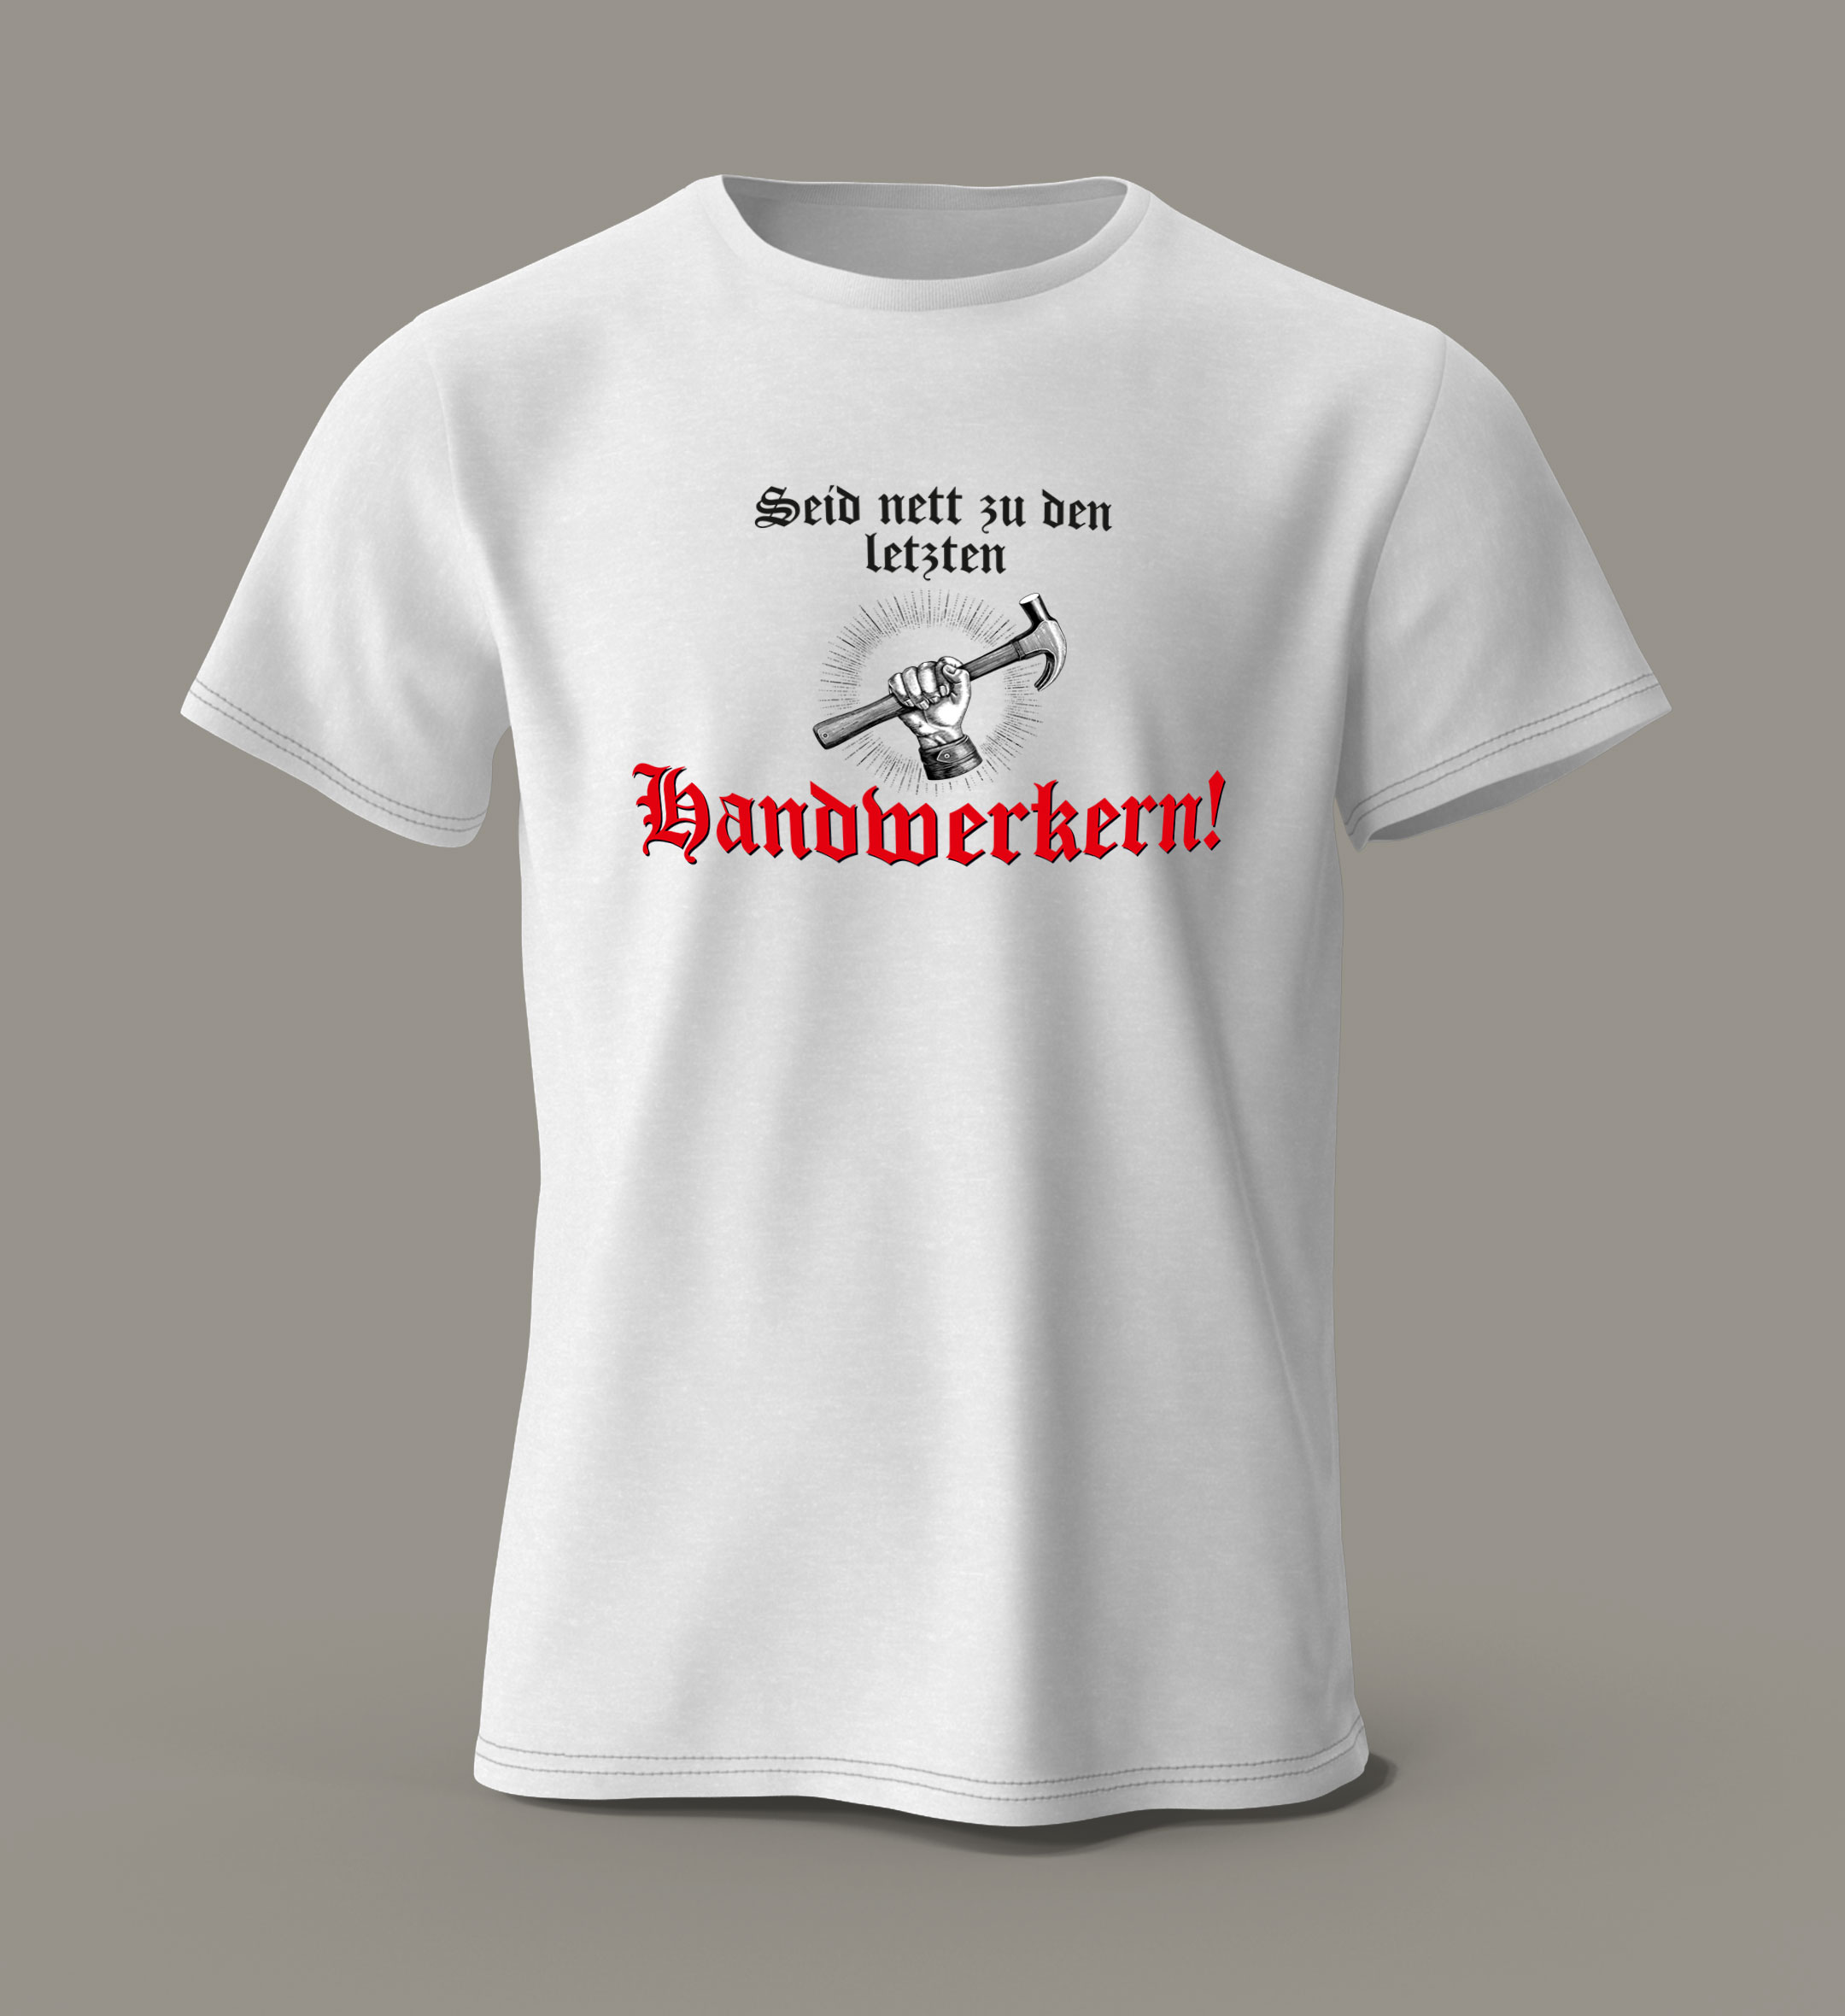 T-Shirt Unisex "Seid nett zu den letzten Handwerkern"